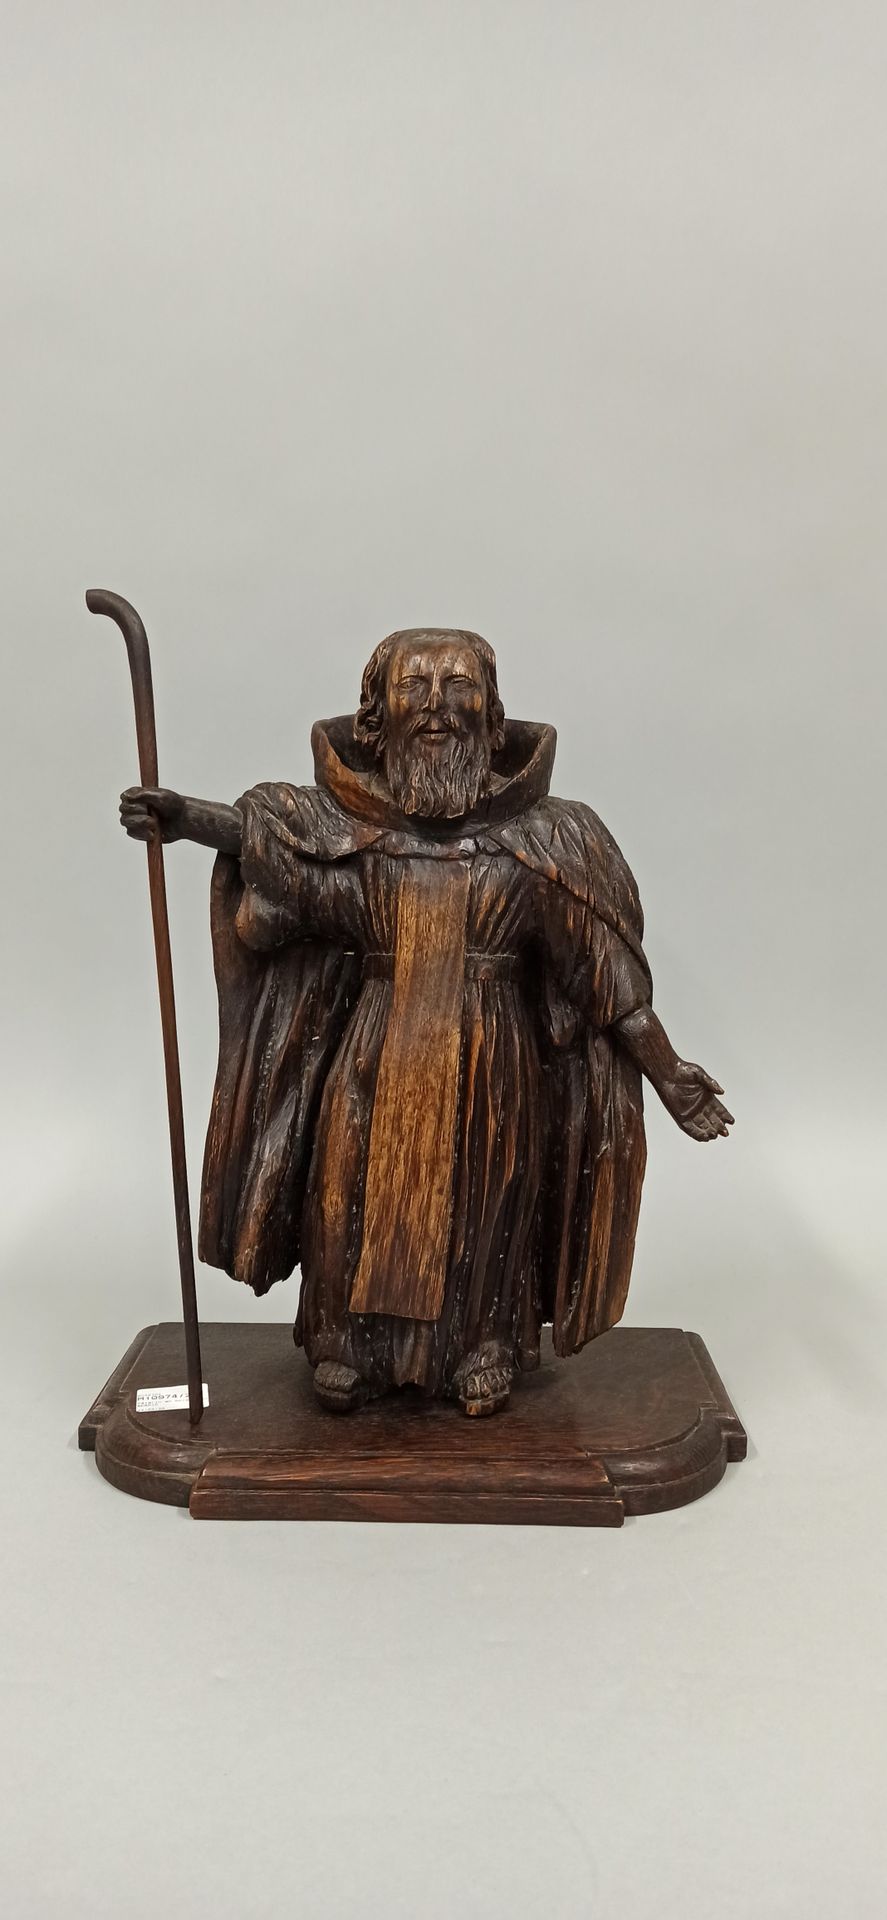 Null 一个朝圣者的木制雕像，右手拿着他的杖。

19世纪

高度：37.5厘米 - 长度：30厘米 - 宽度：16.5厘米